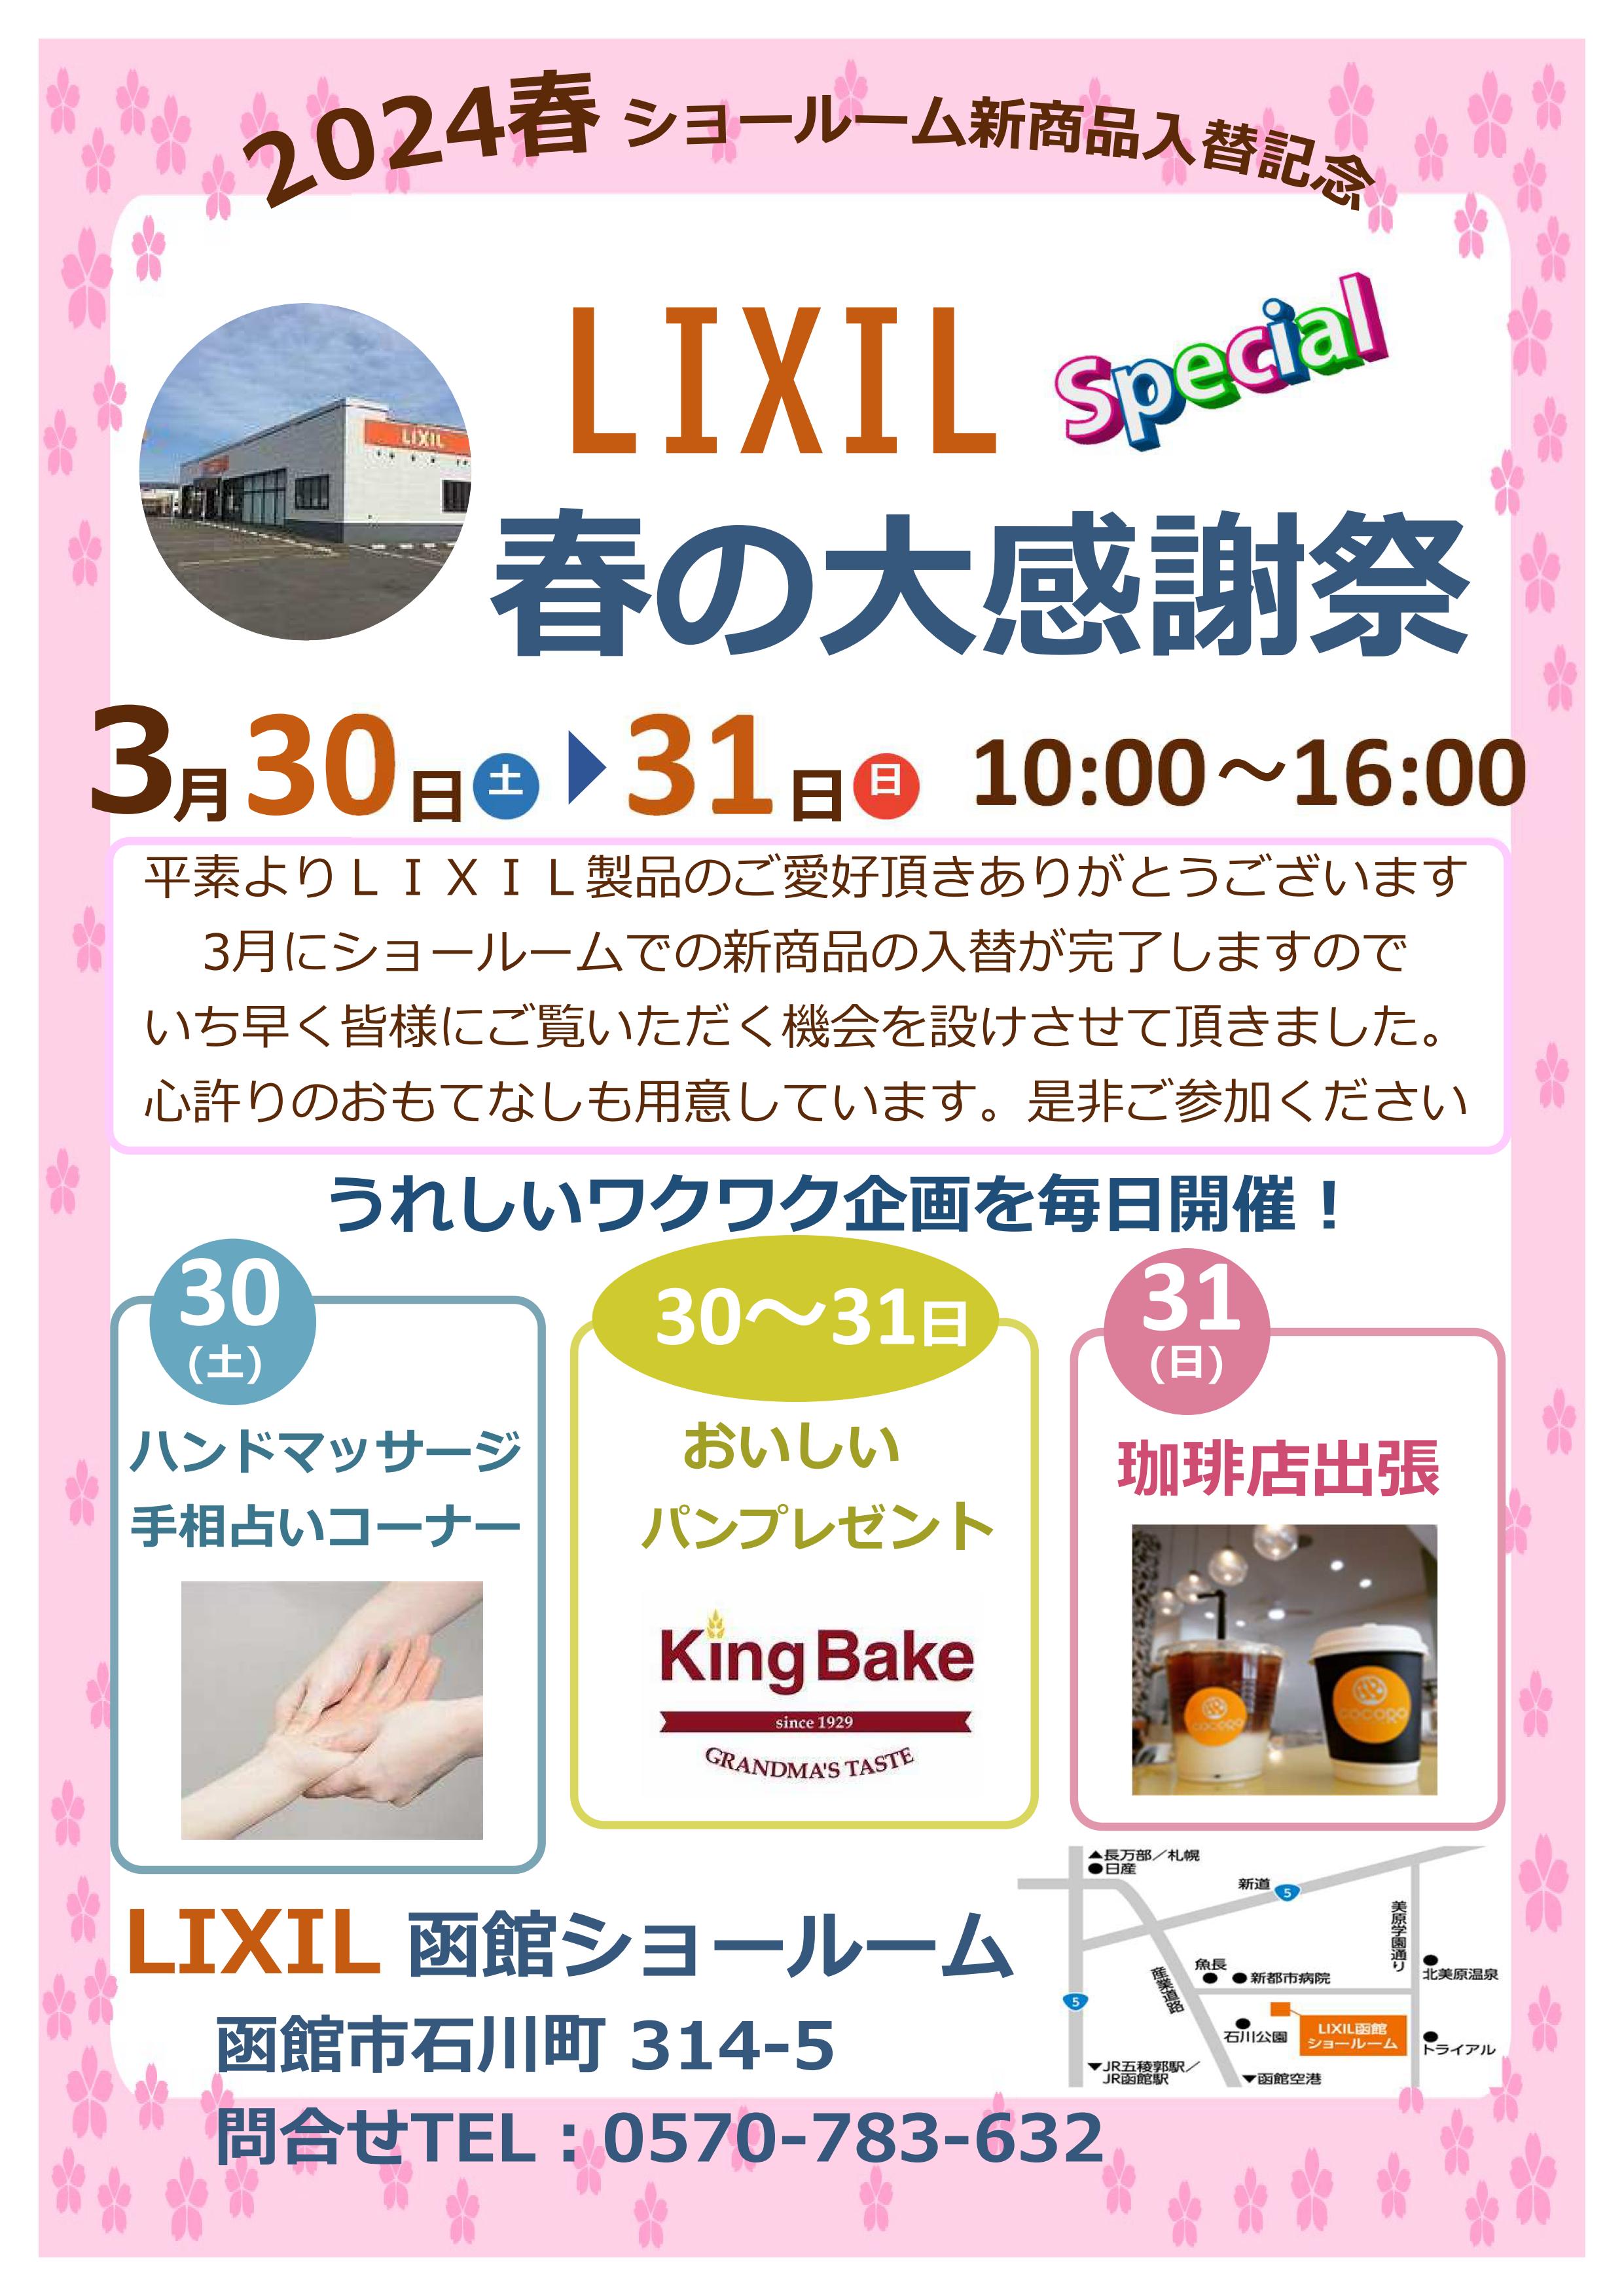 LIXIL函館春のショールーム・大感謝祭🎵 リ・ウィンドのイベントキャンペーン 写真1